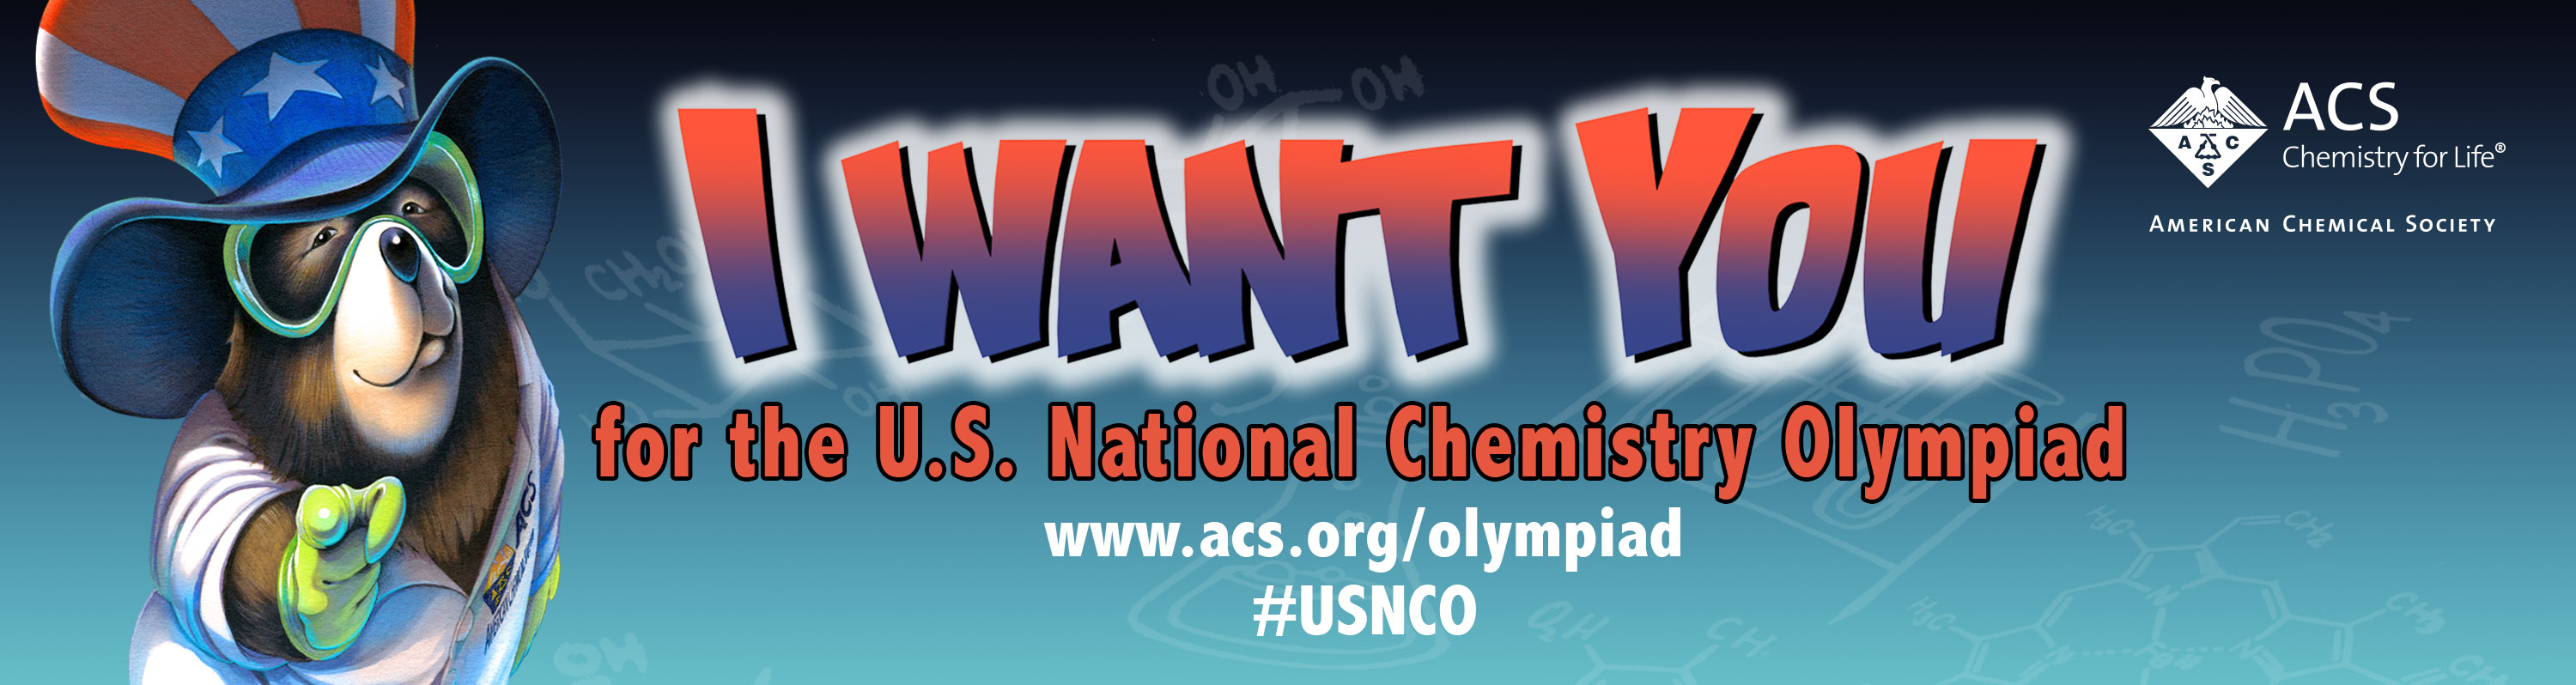 ACS National Chemistry Olympiad